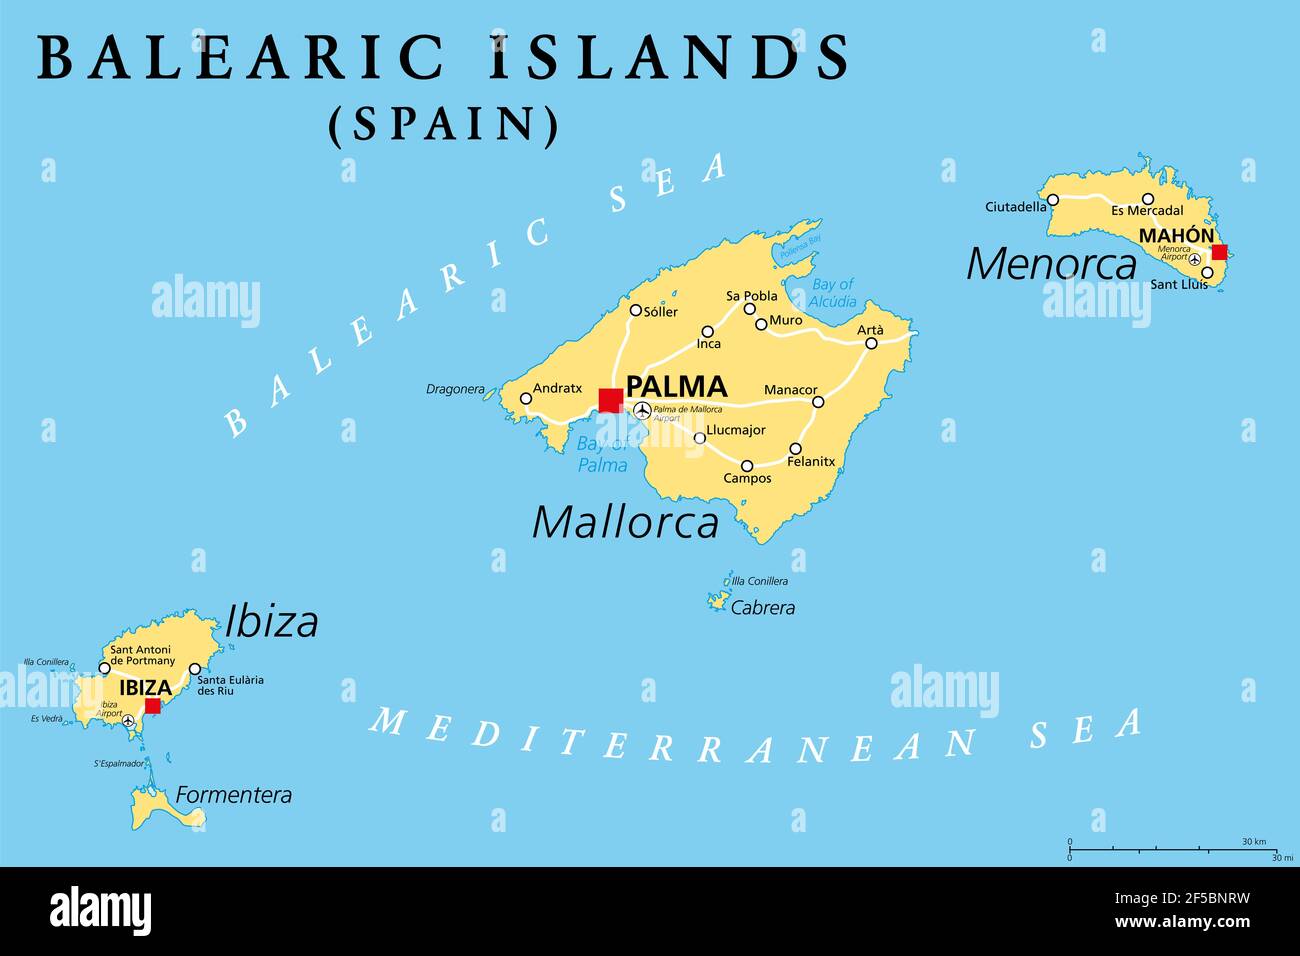 Balearic Islands, political map, with main islands Mallorca, Ibiza, Menorca and Formentera. Archipelago of islands in Spain in the Mediterranean Sea, Stock Photo